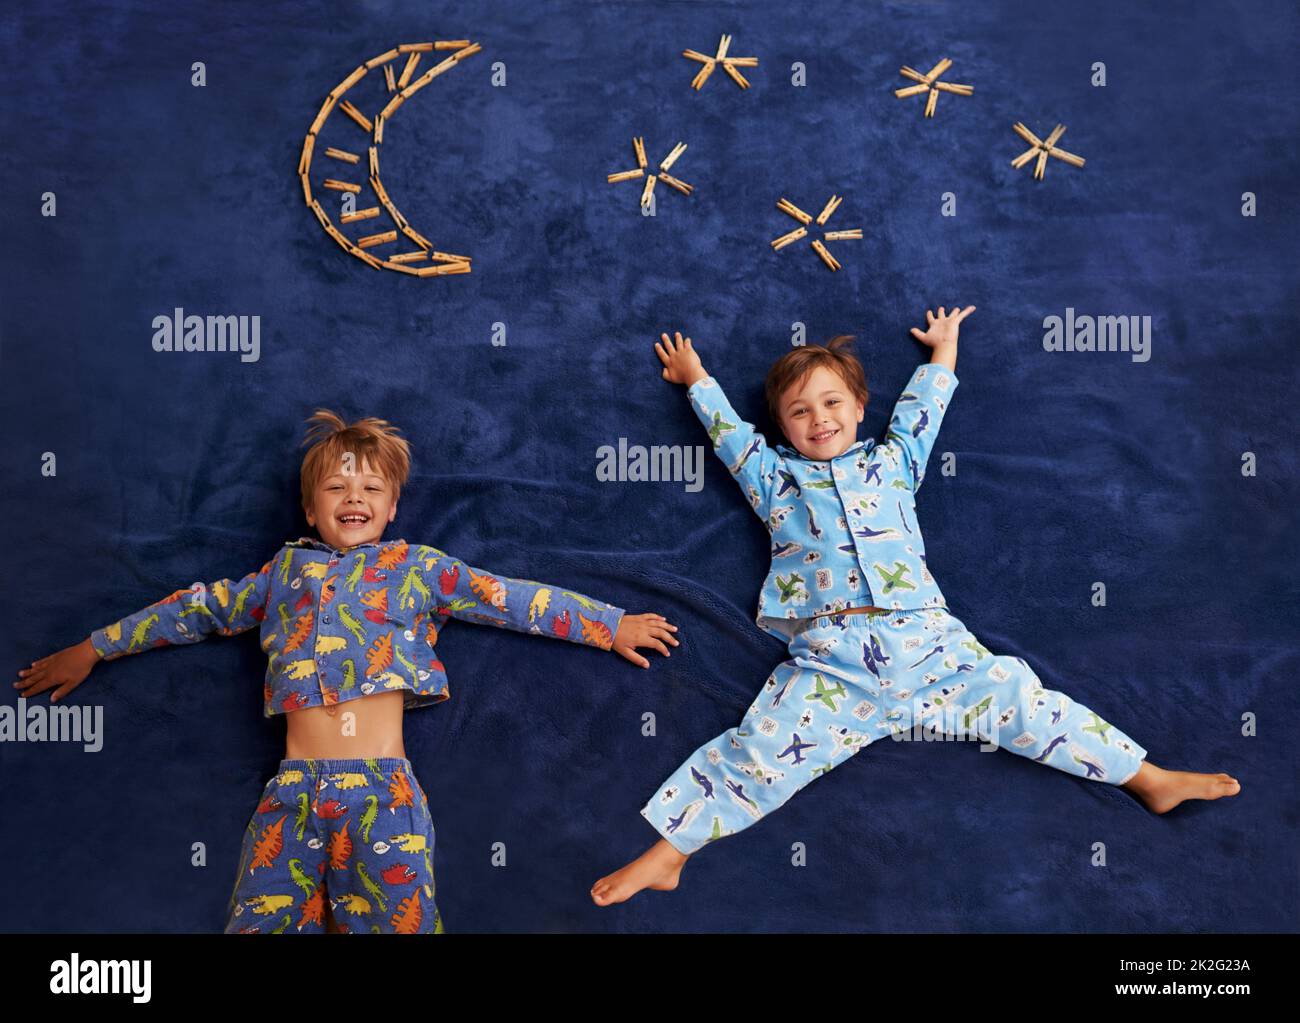 Day night kid. Детская фотосессия в пижамах. Танец в пижамах. Pajamas Party Kids. Пижама Day and Night детская.